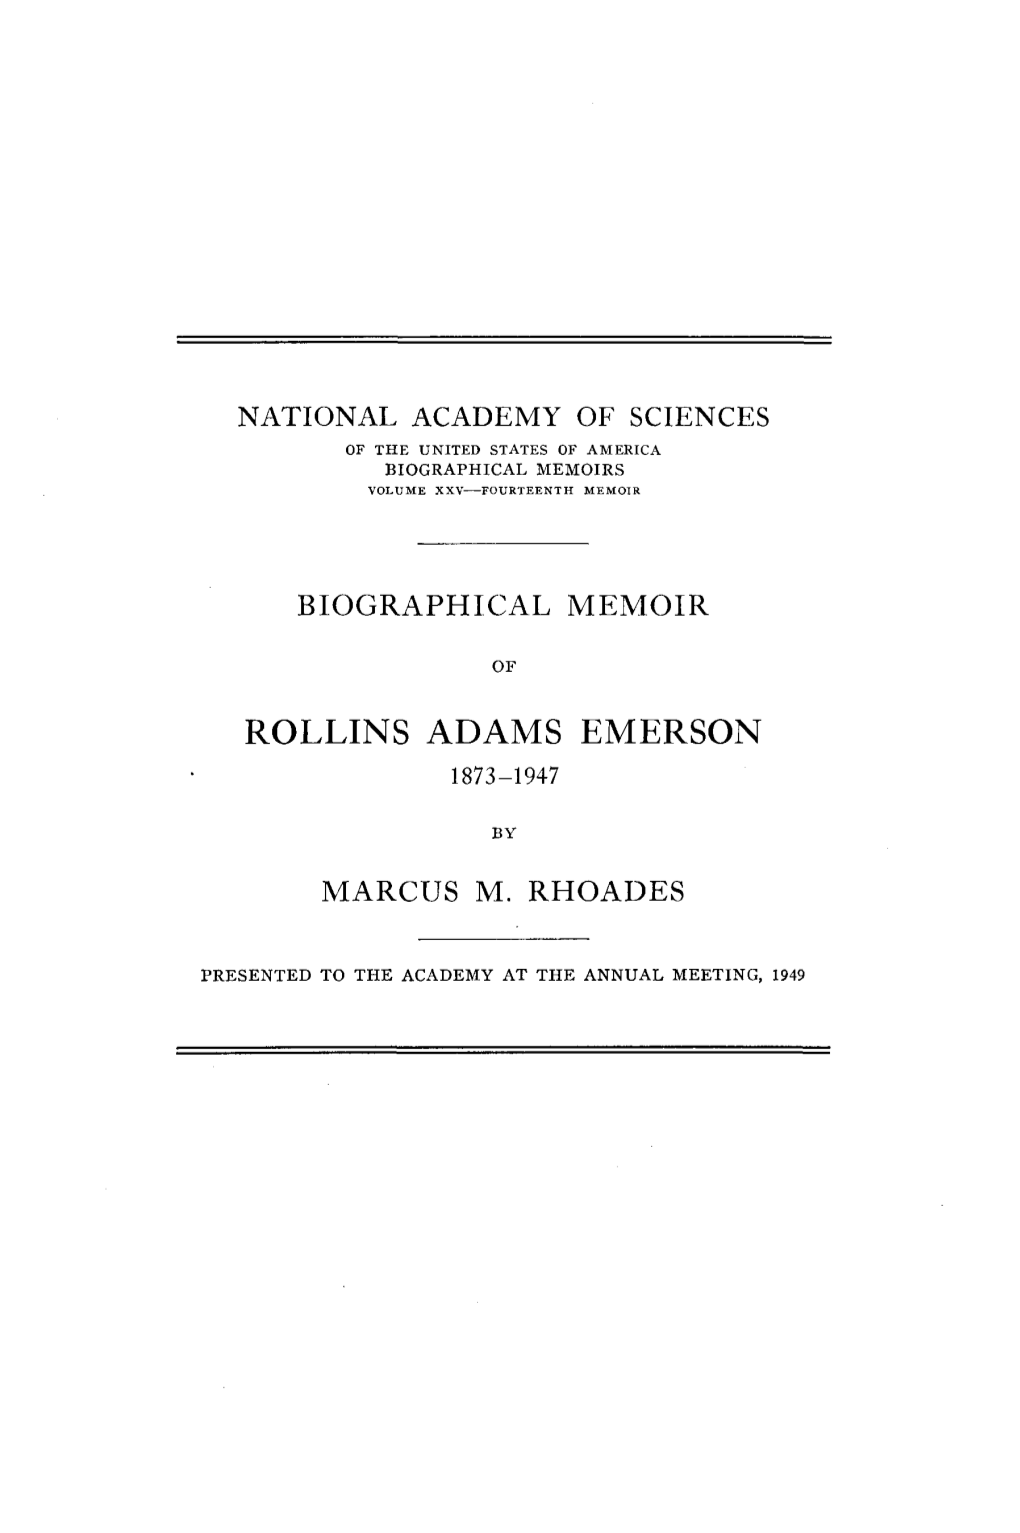 Rollins Adams Emerson 1873-1947